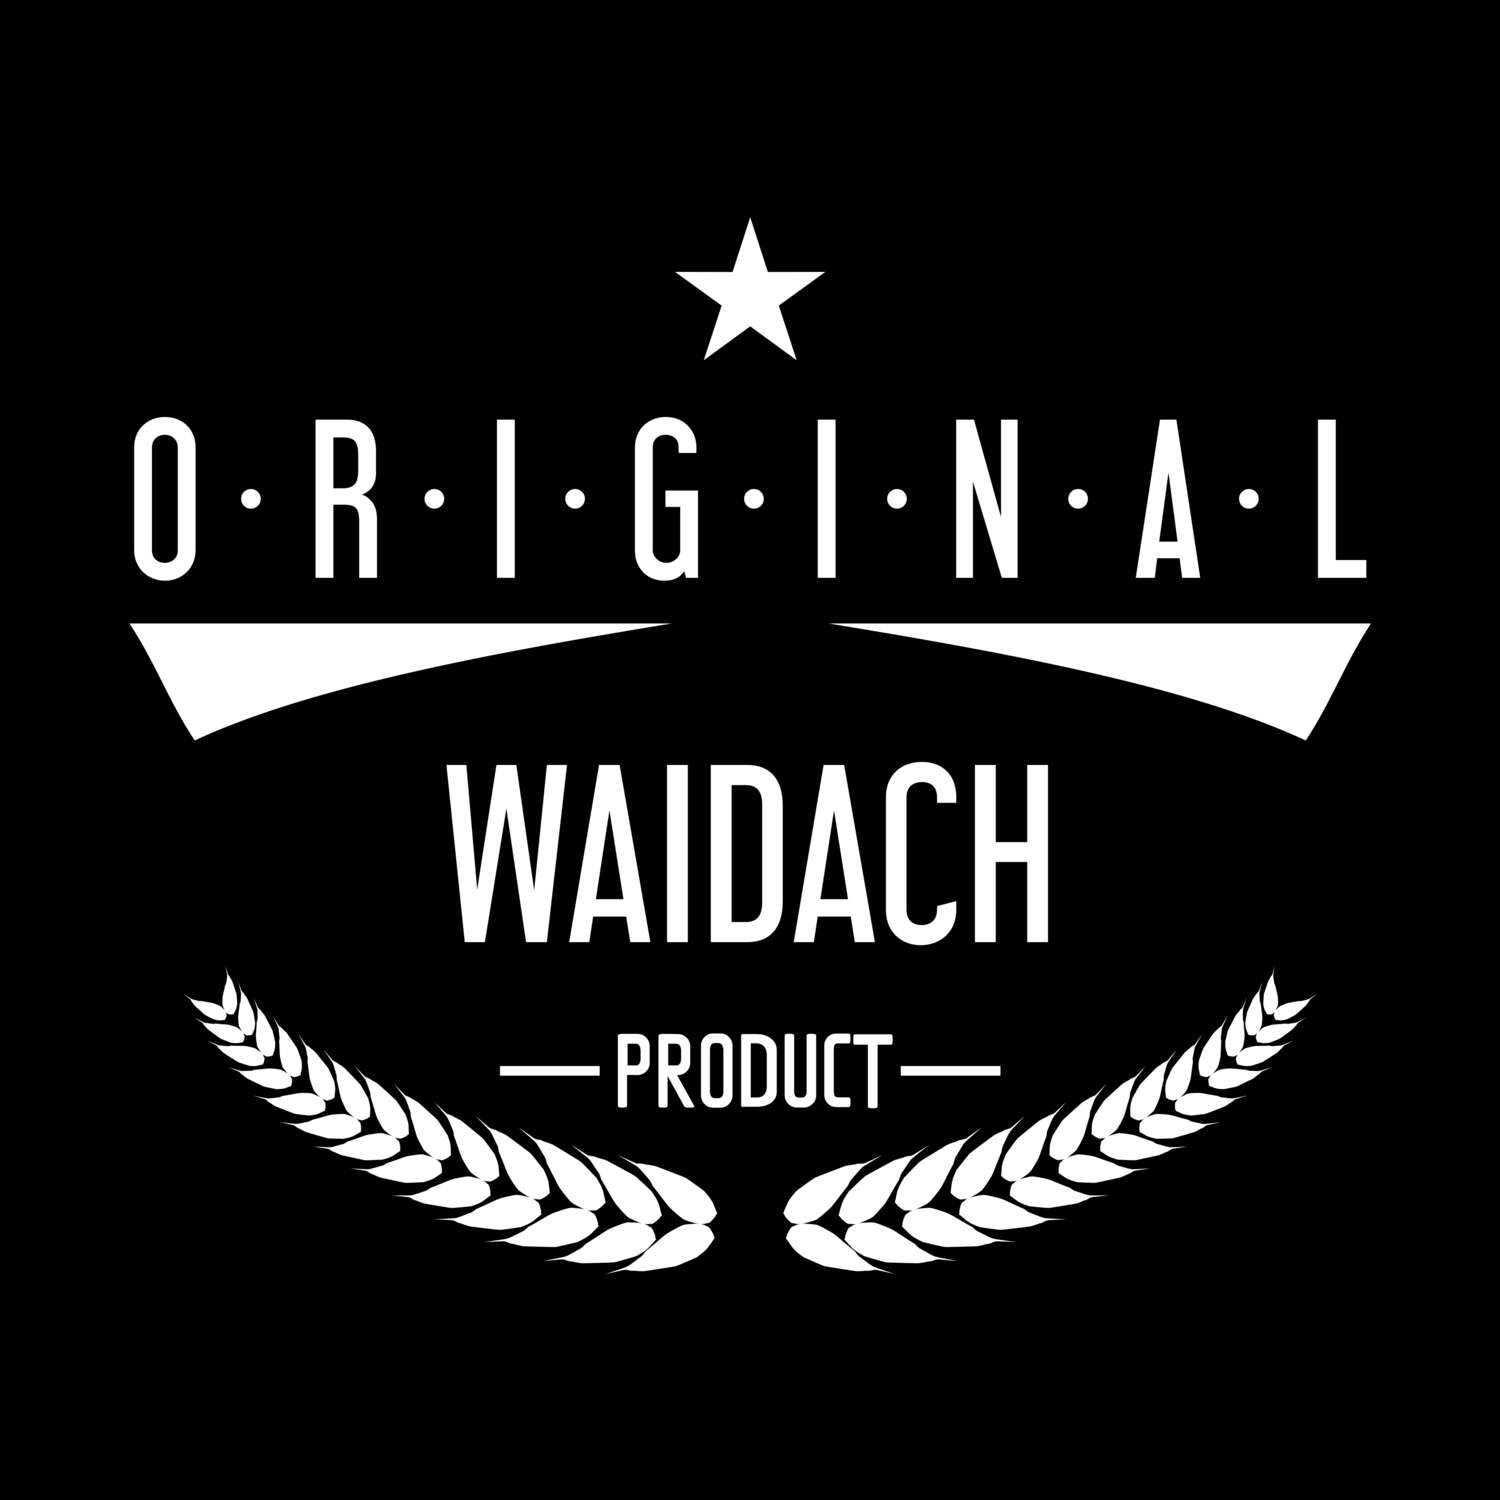 Waidach T-Shirt »Original Product«